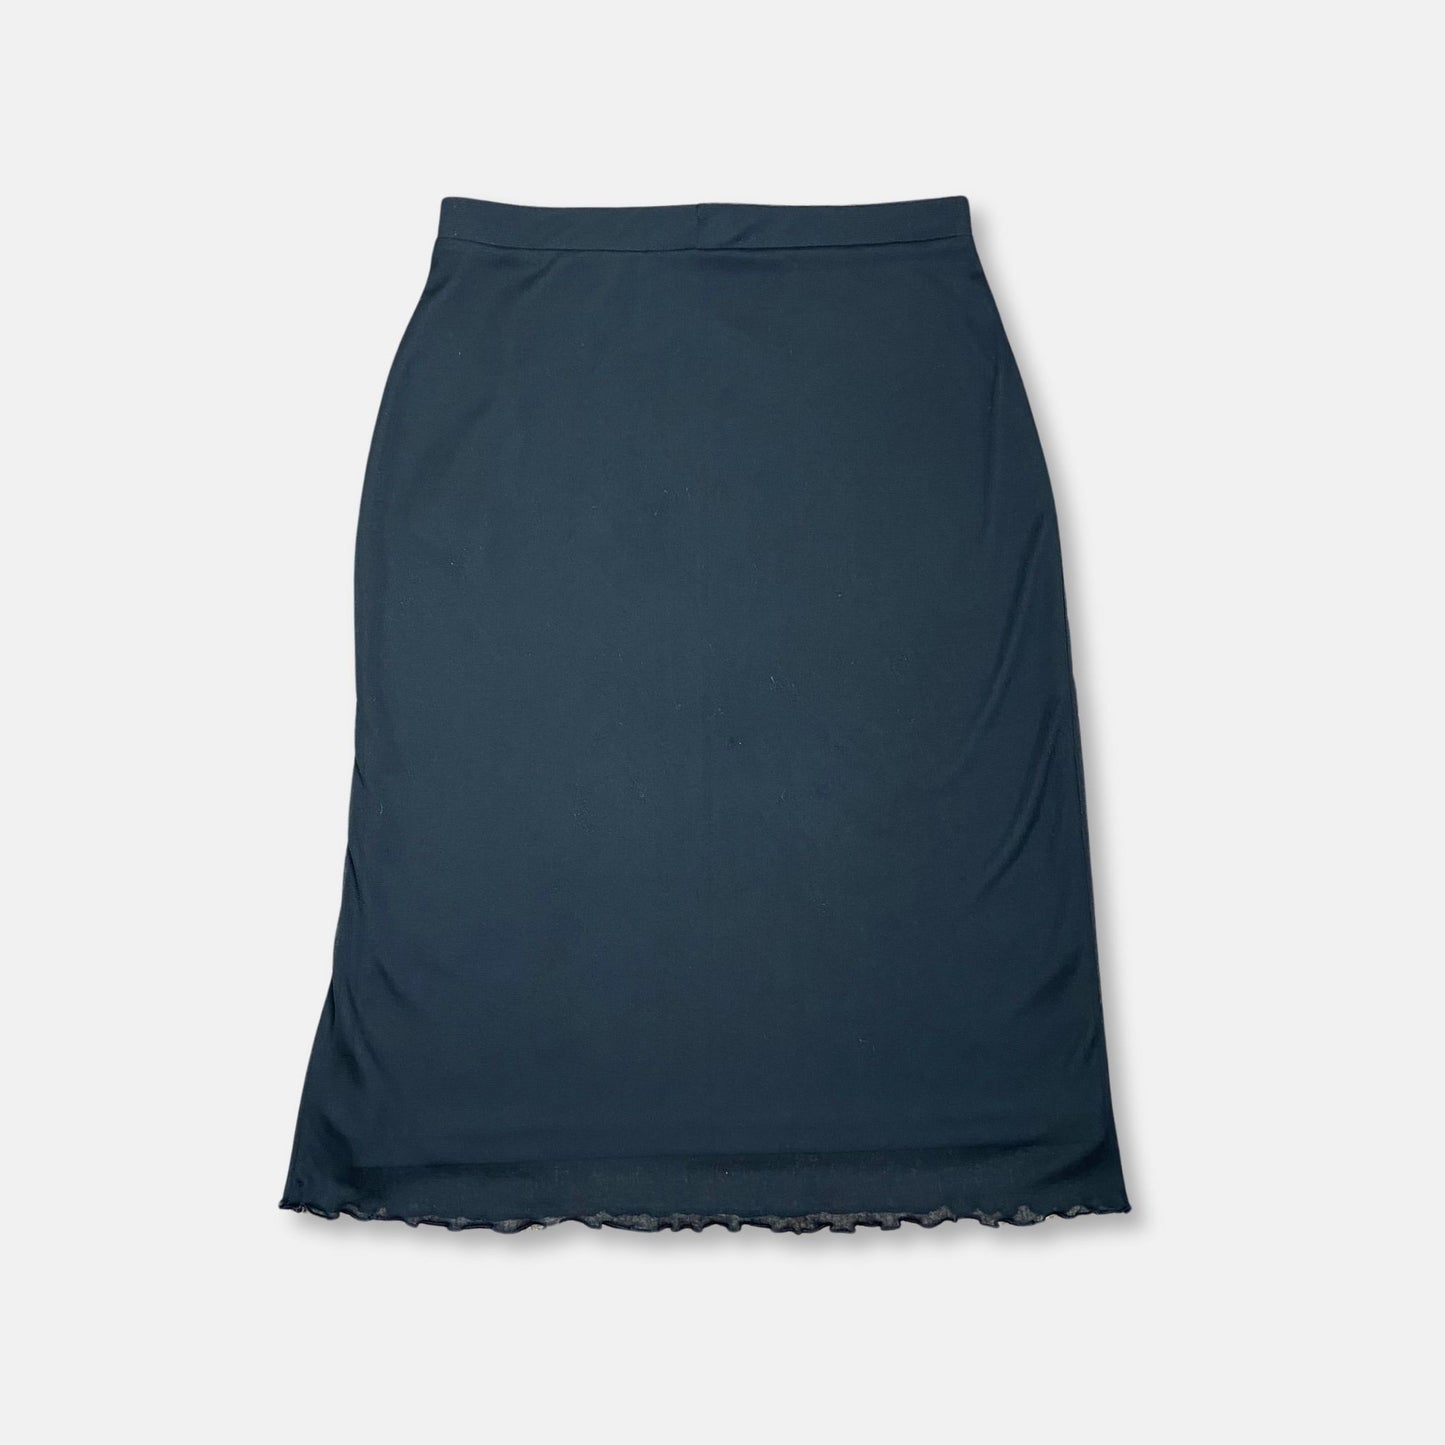 00s Black Mesh Midi Skirt - Size XS/S